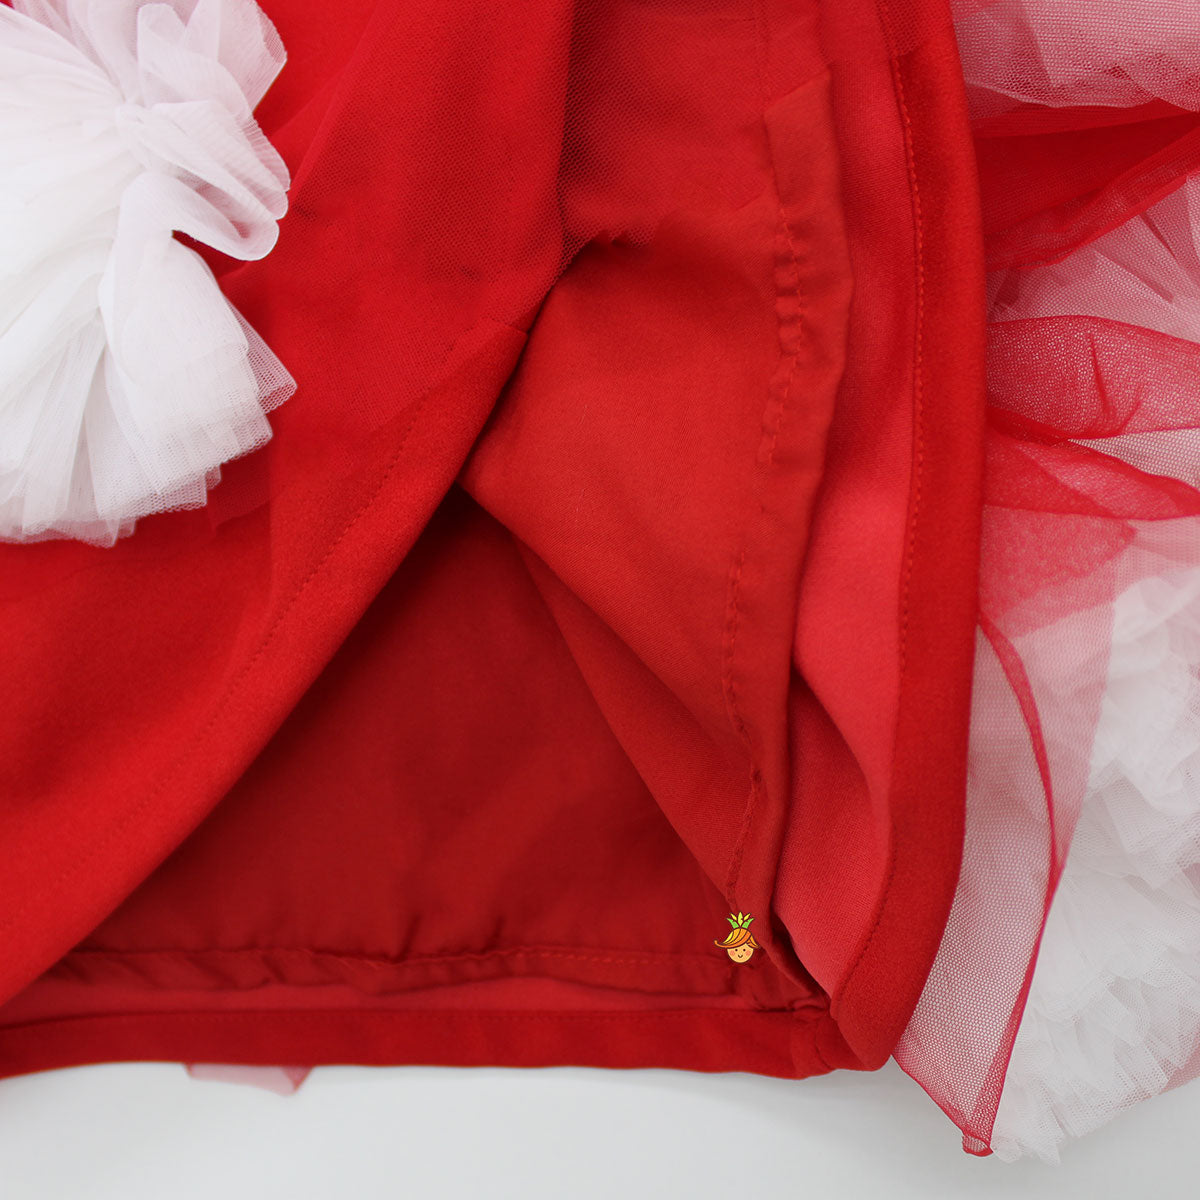 Stunning Red Ruffled Frilly Net Dress